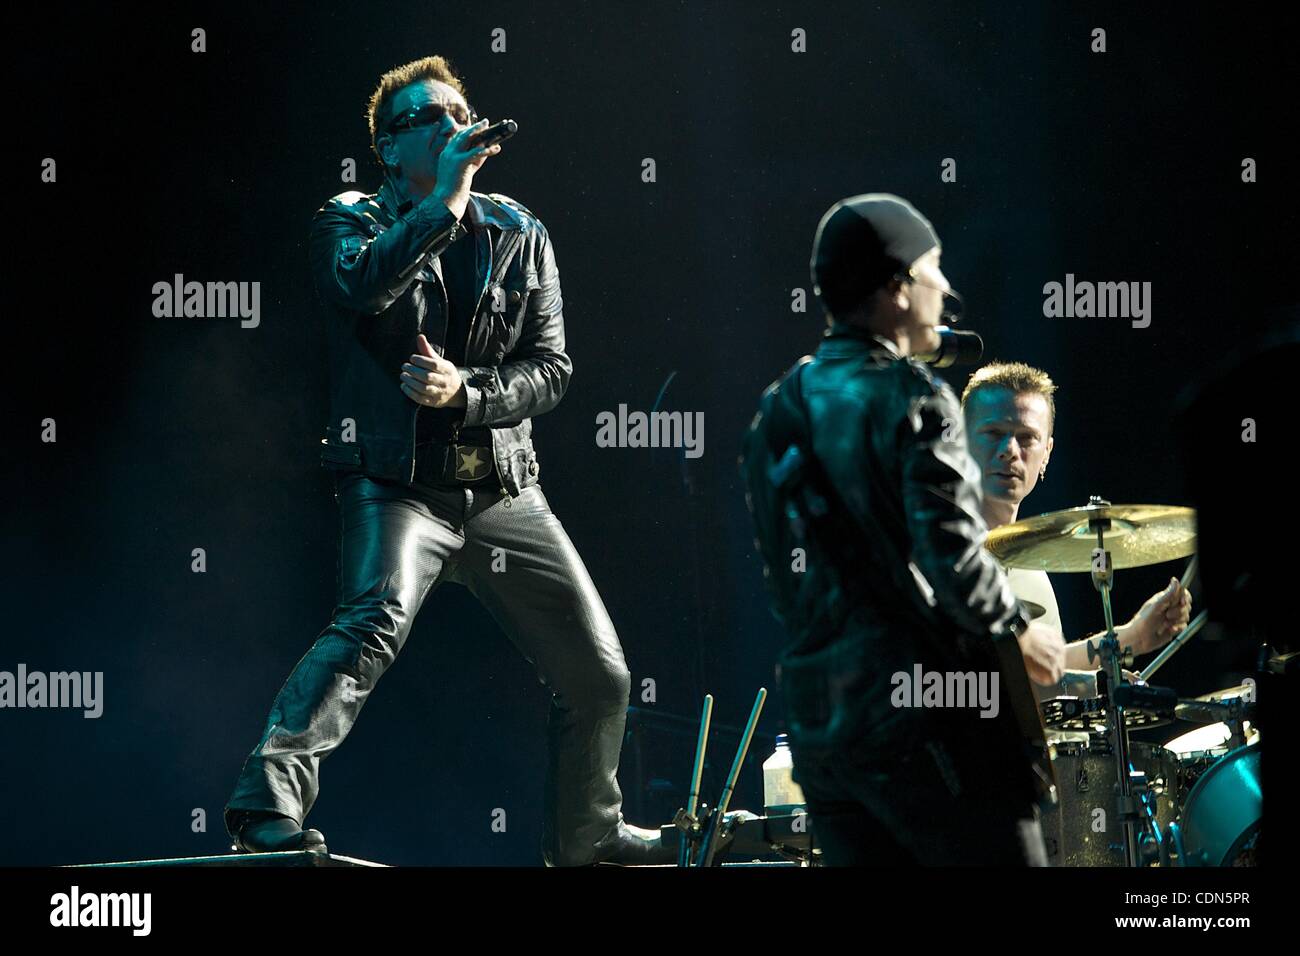 Sept 30, 2010 - Sevilla, Andalucia, Spain - The Irish rock band U2 performs on stage during the U2 360 Tour concert at the Estadio Olimpico. (Credit Image: © Jack Abuin/ZUMAPRESS.com) Stock Photo